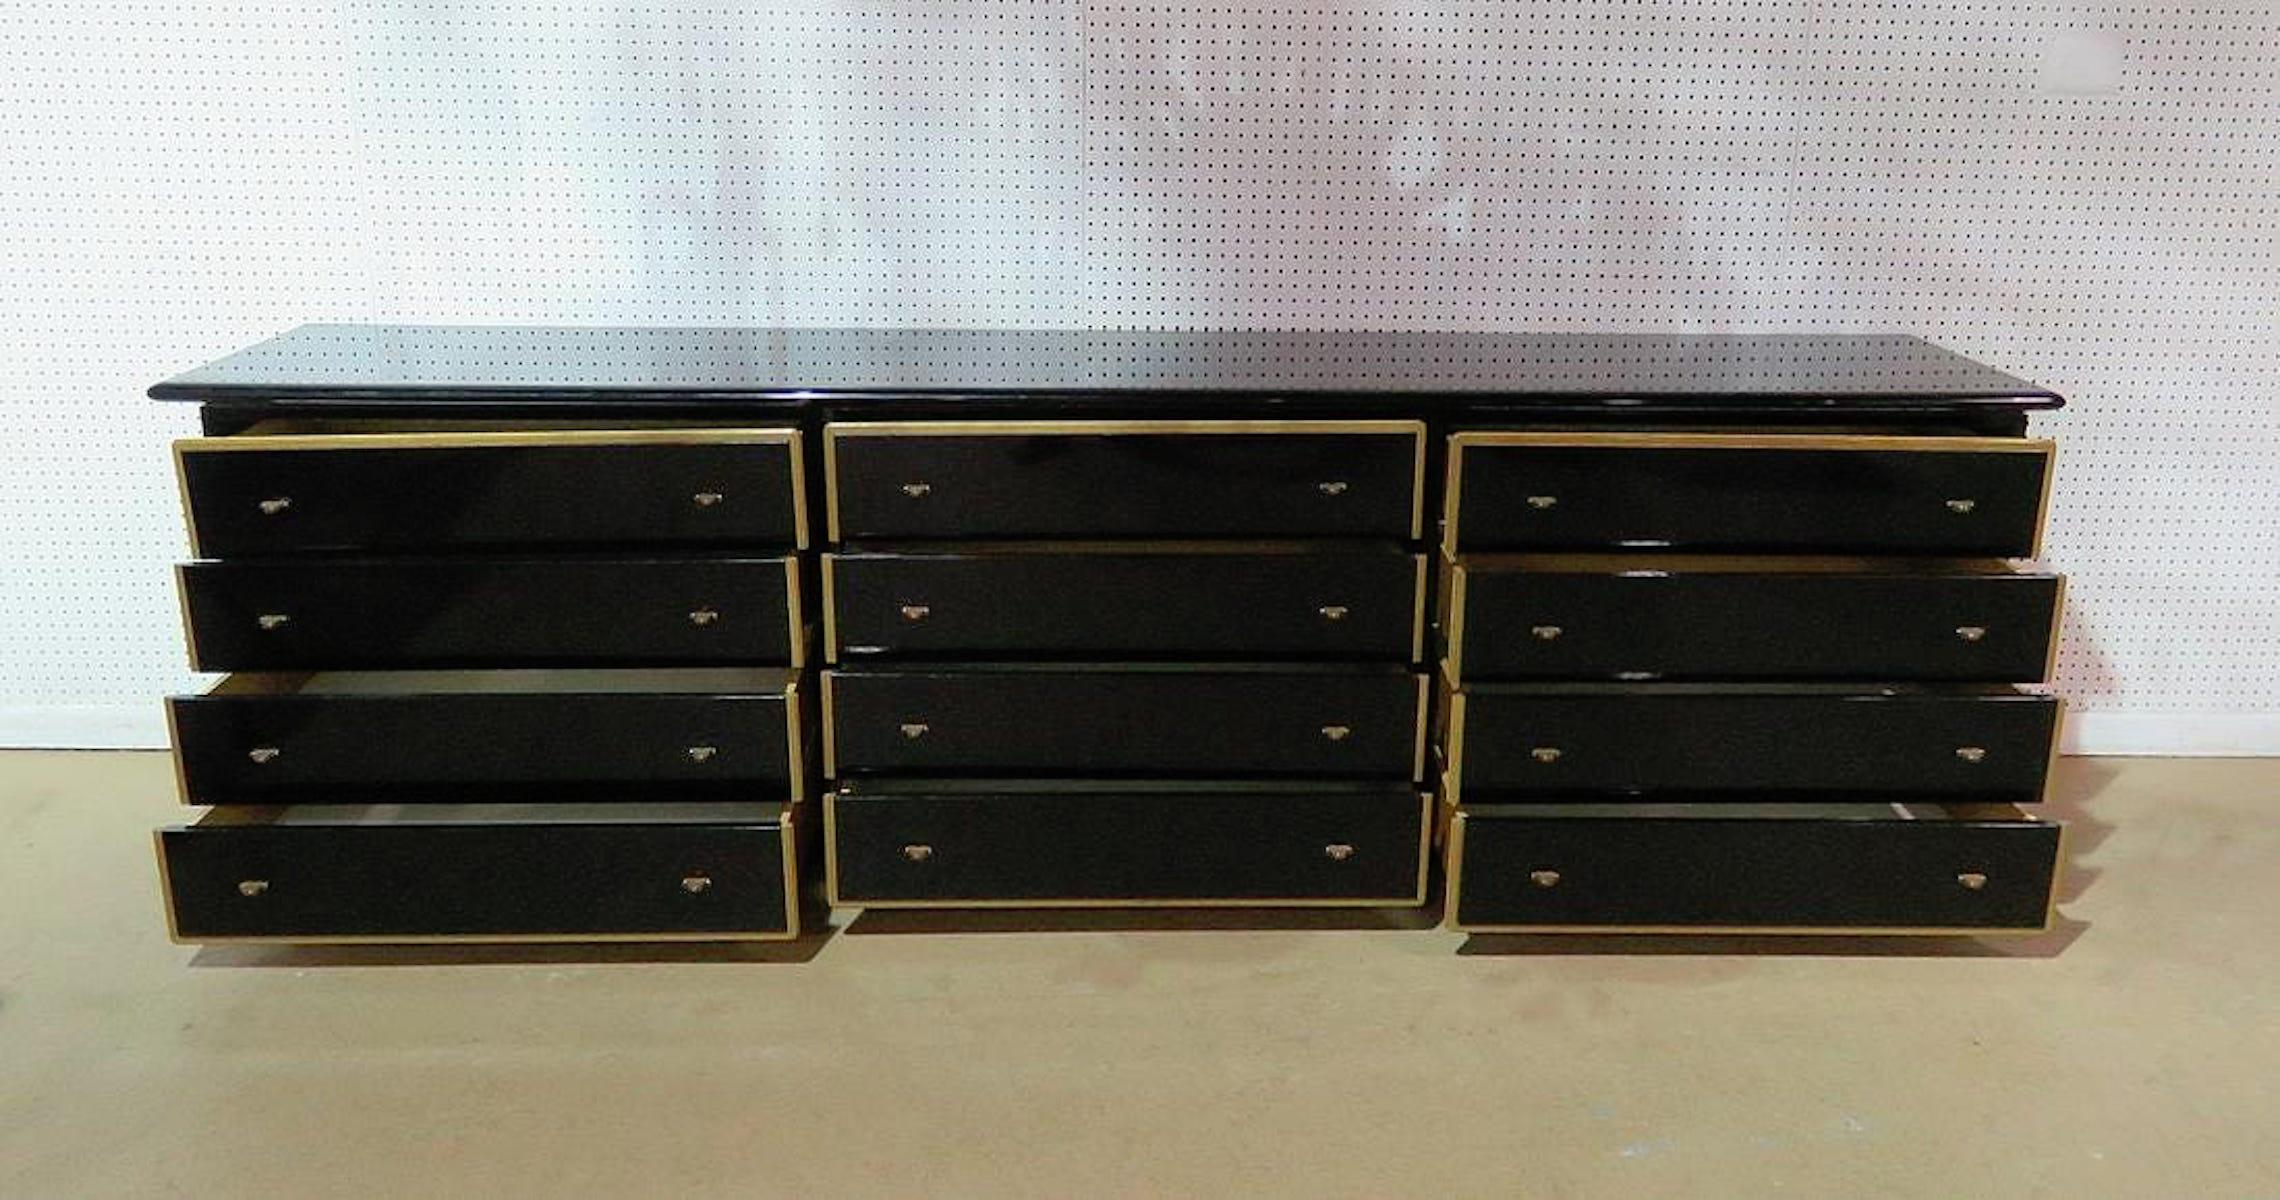 Large twelve drawer black dresser with blonde wood trim.
(Please confirm item location - NY or NJ - with dealer).
   